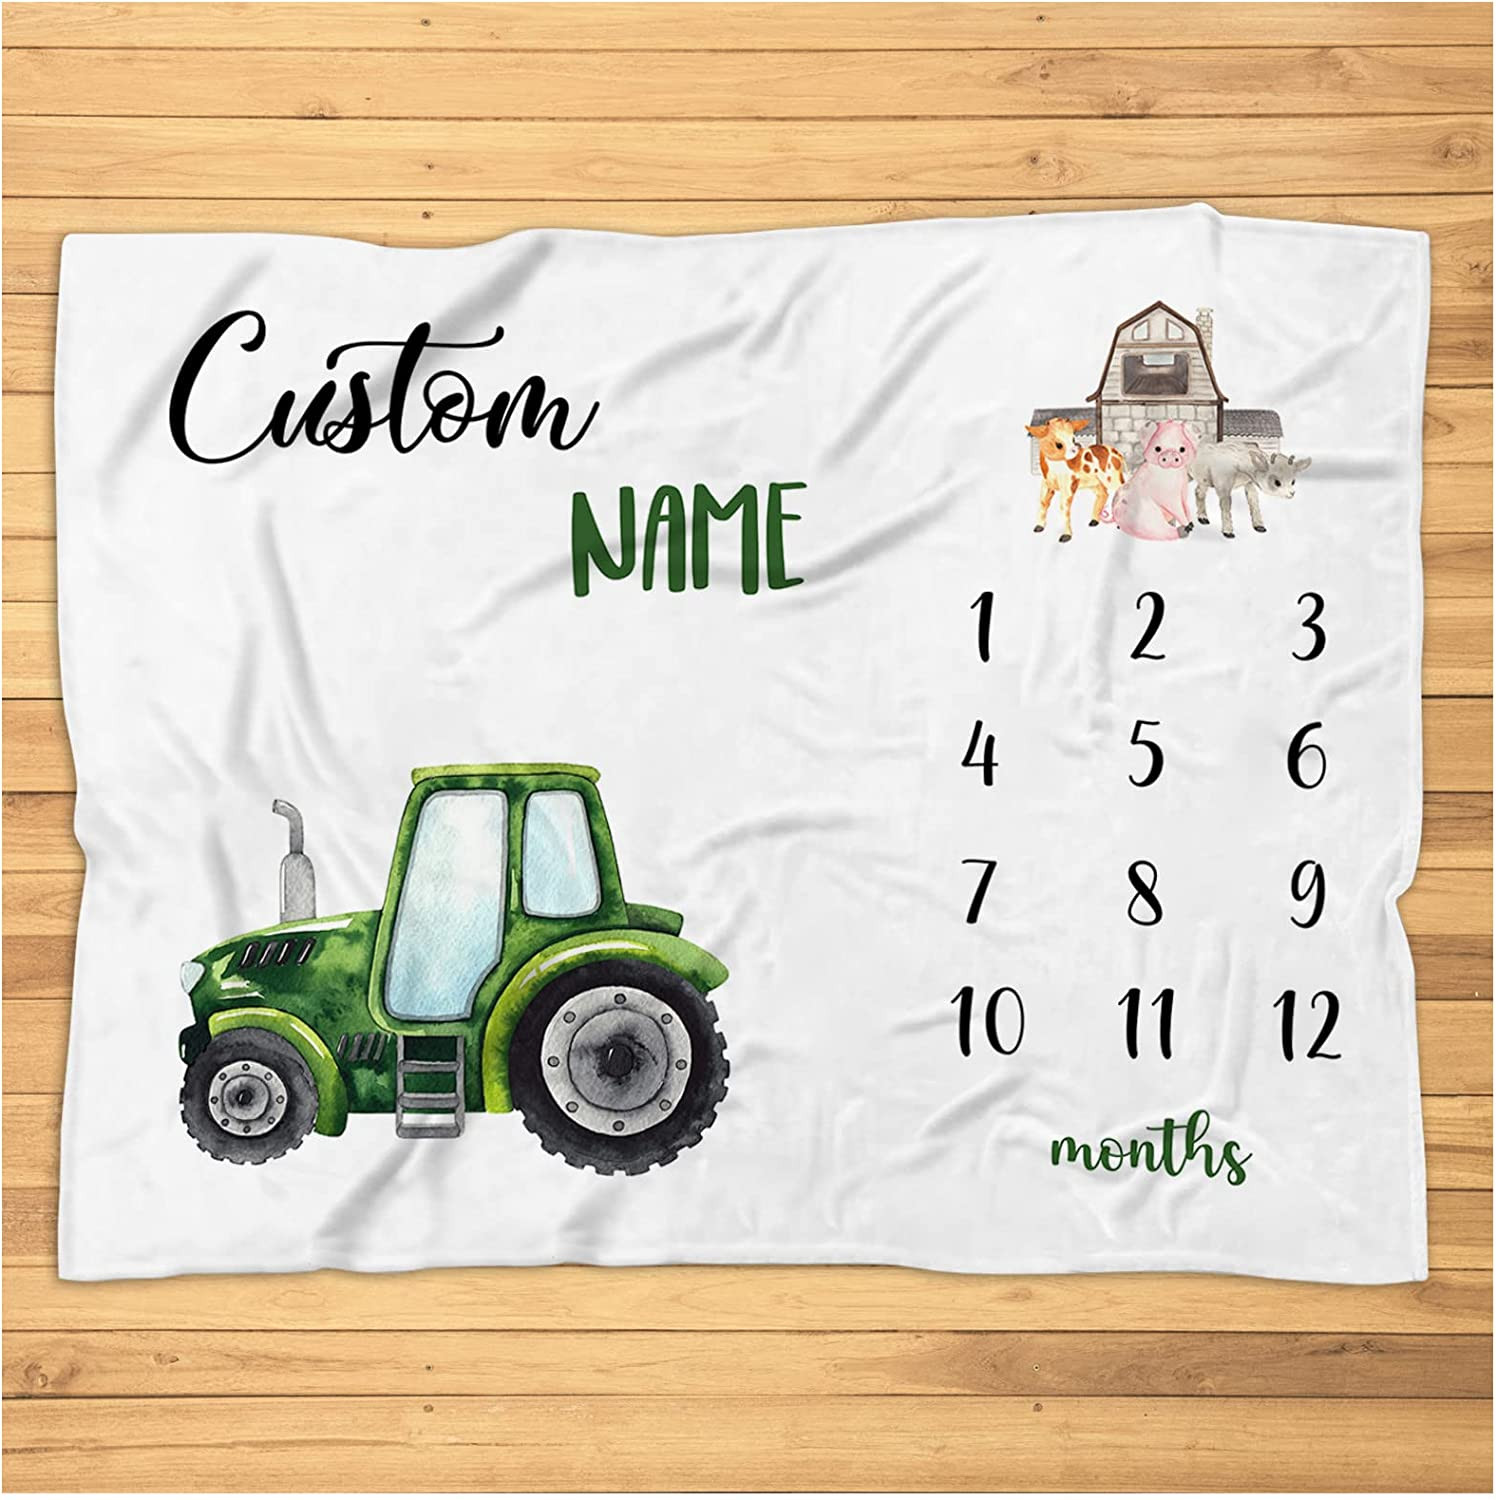 Personalized Tractor Milestone Blanket - Farm Monthly Milestone Photo Prop - Custom Tractor and Farm Animals Super Soft Plush Fleece Blanket